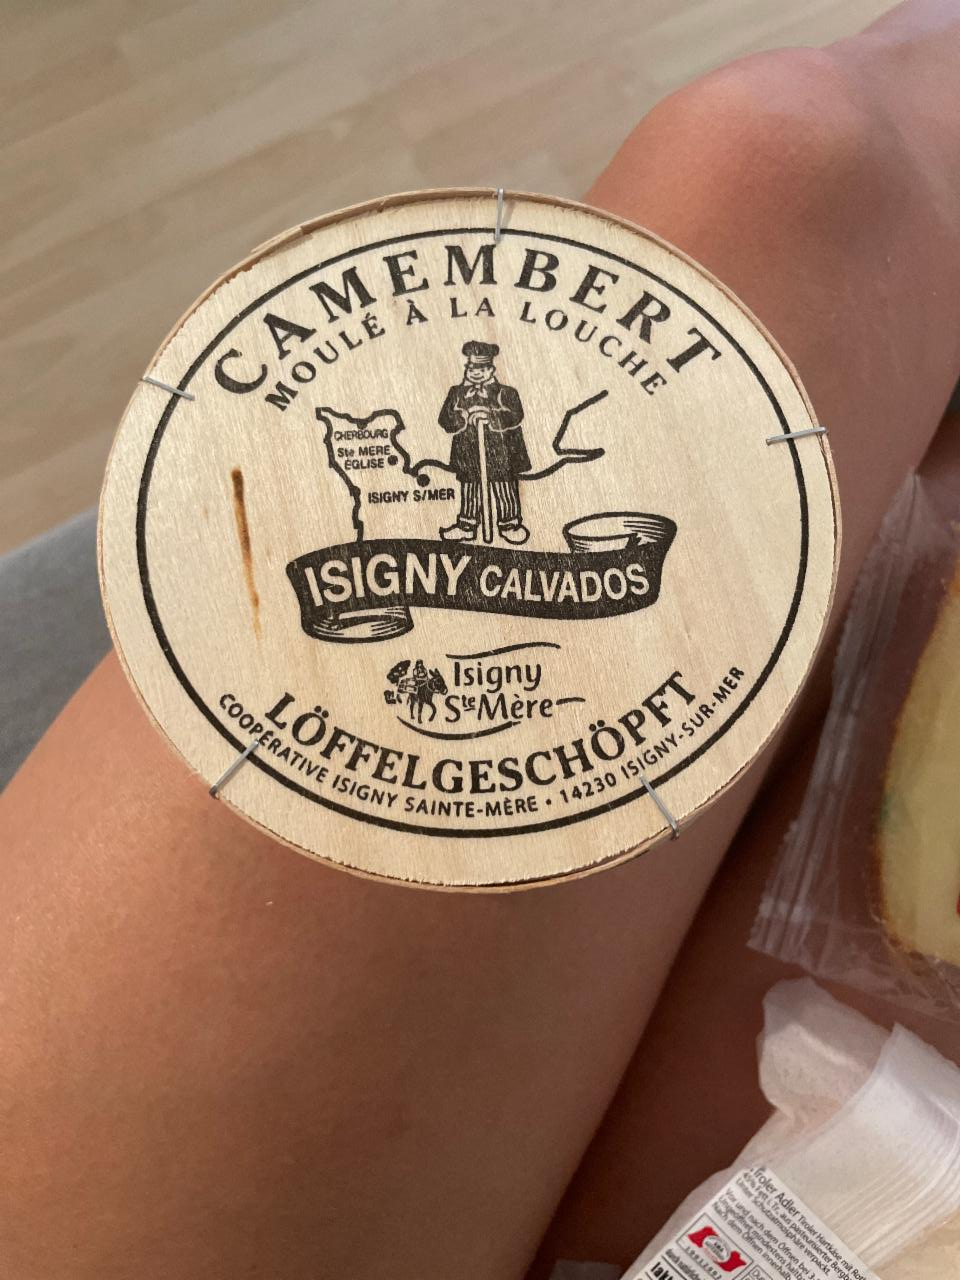 Fotografie - Camembert Isigny Calvados Löffelgeschöpft